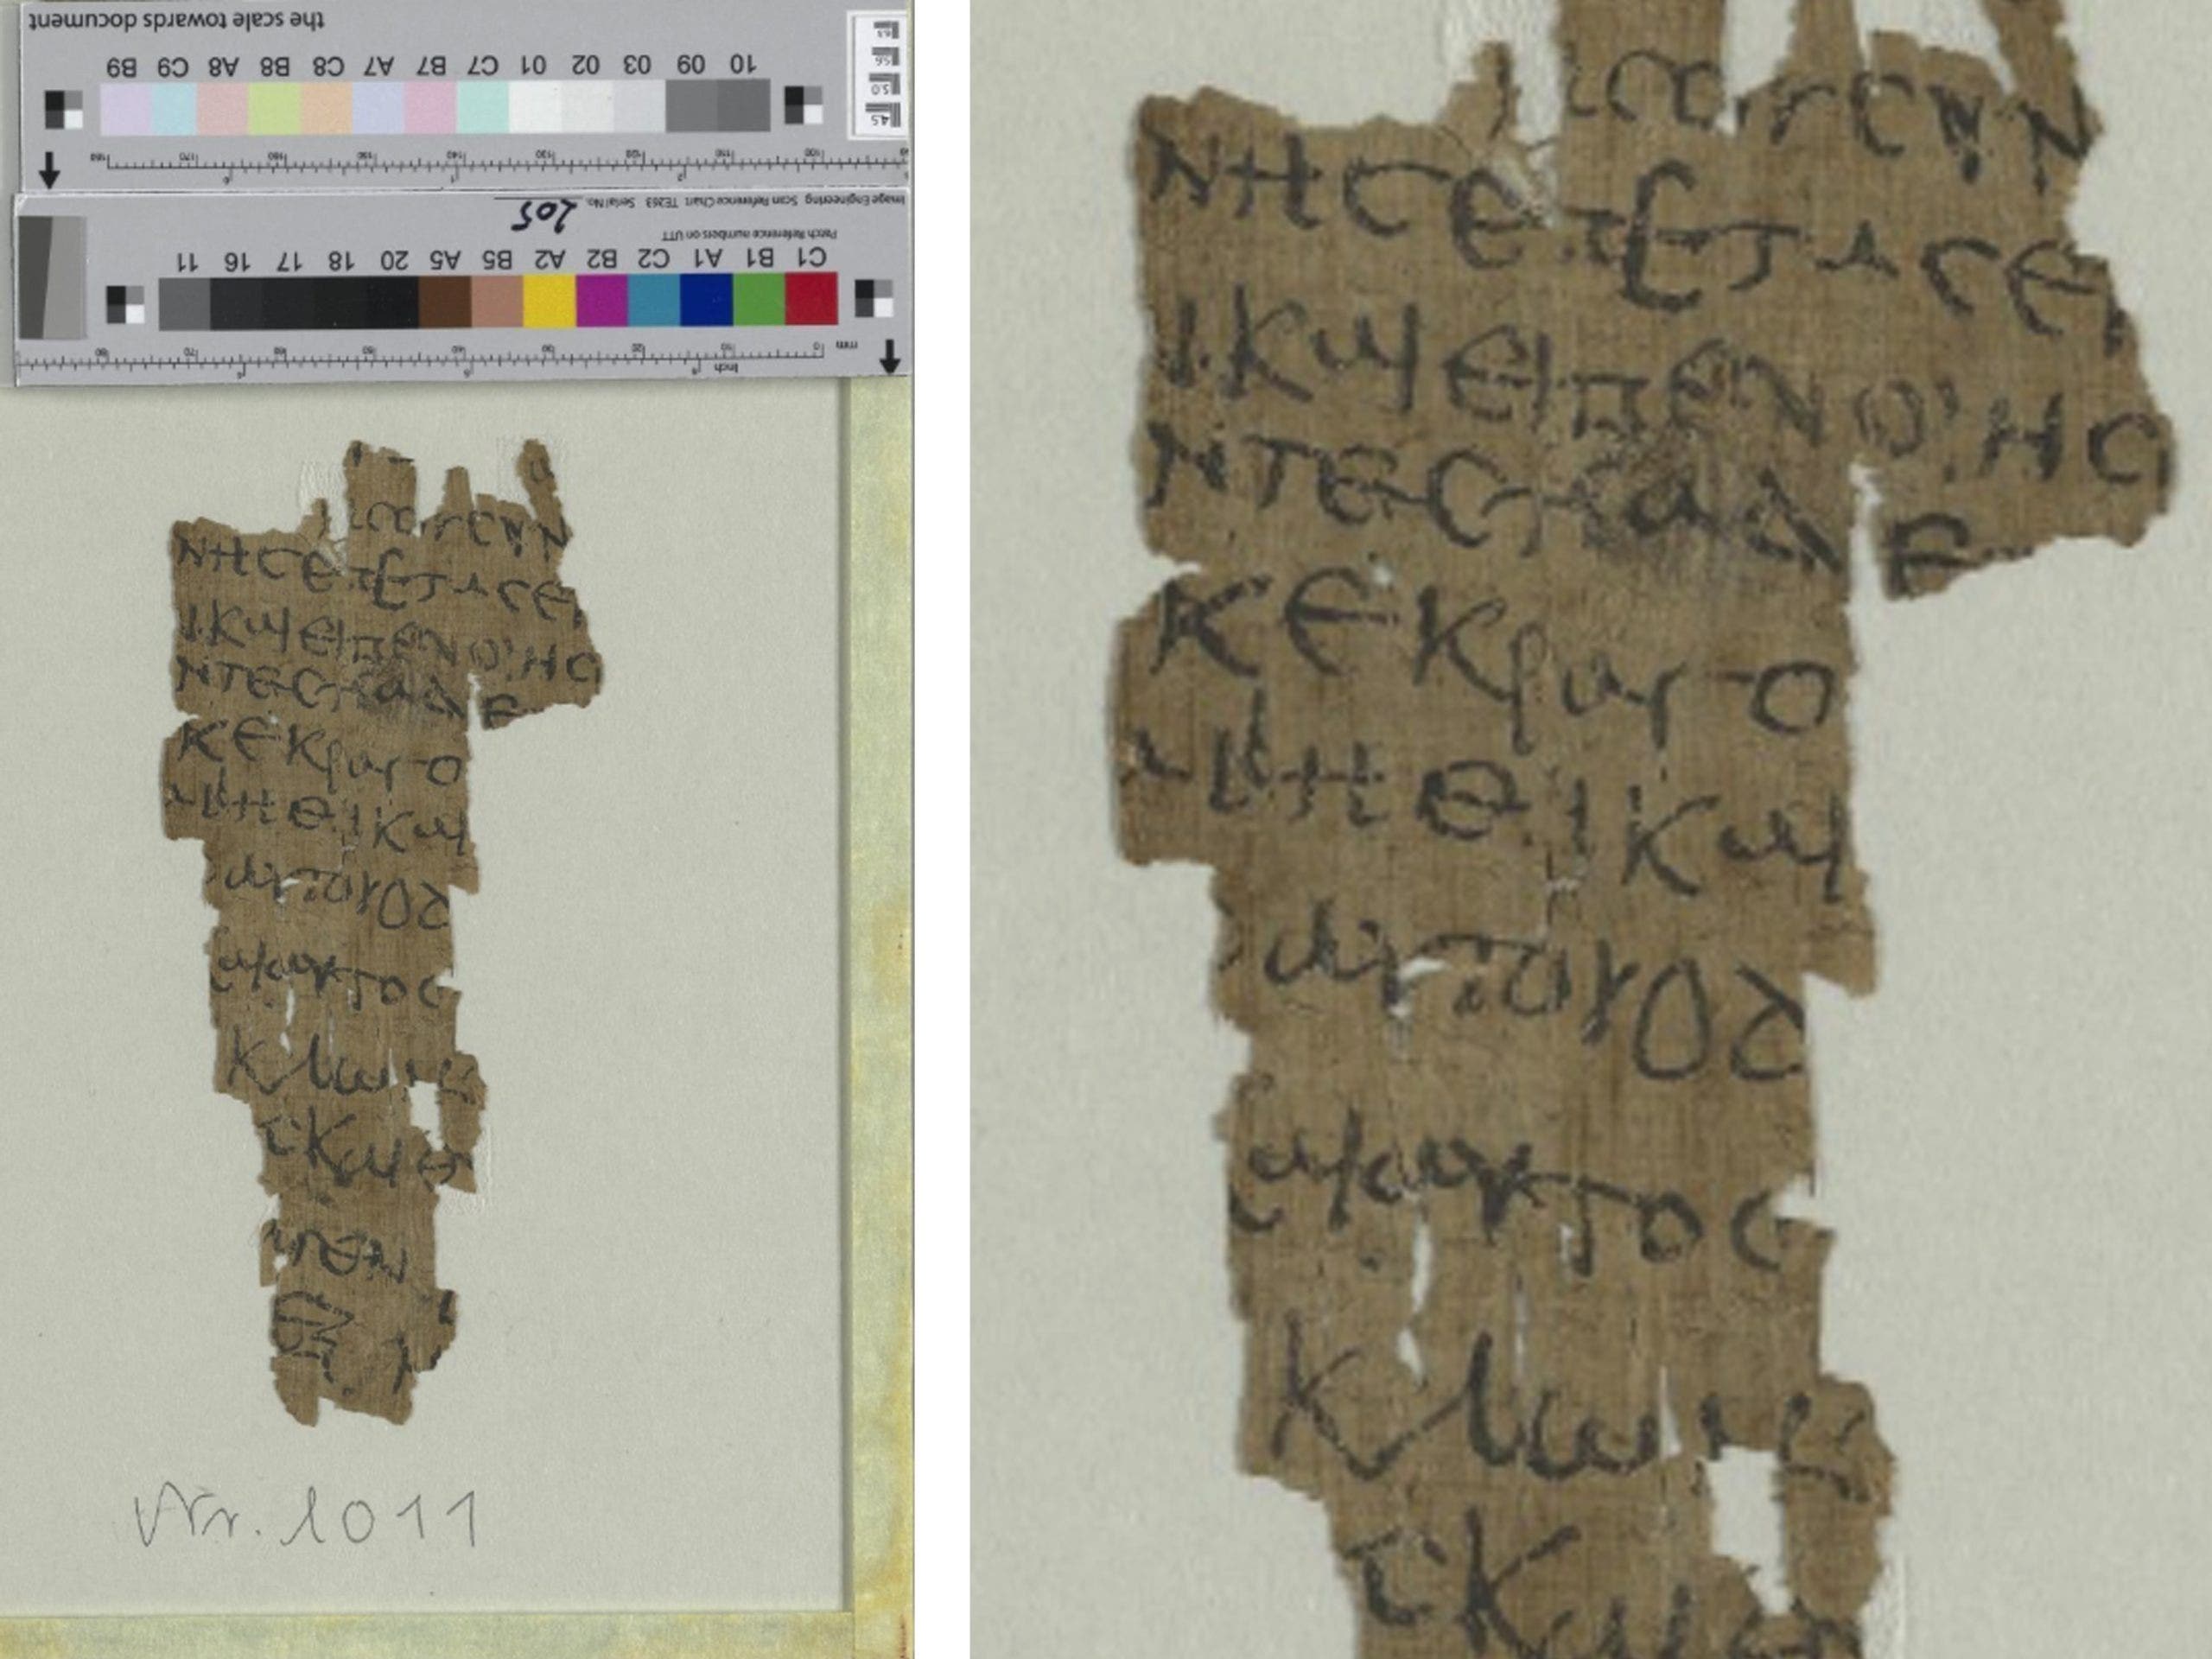 German researchers decode earliest known written record of Jesus' childhood